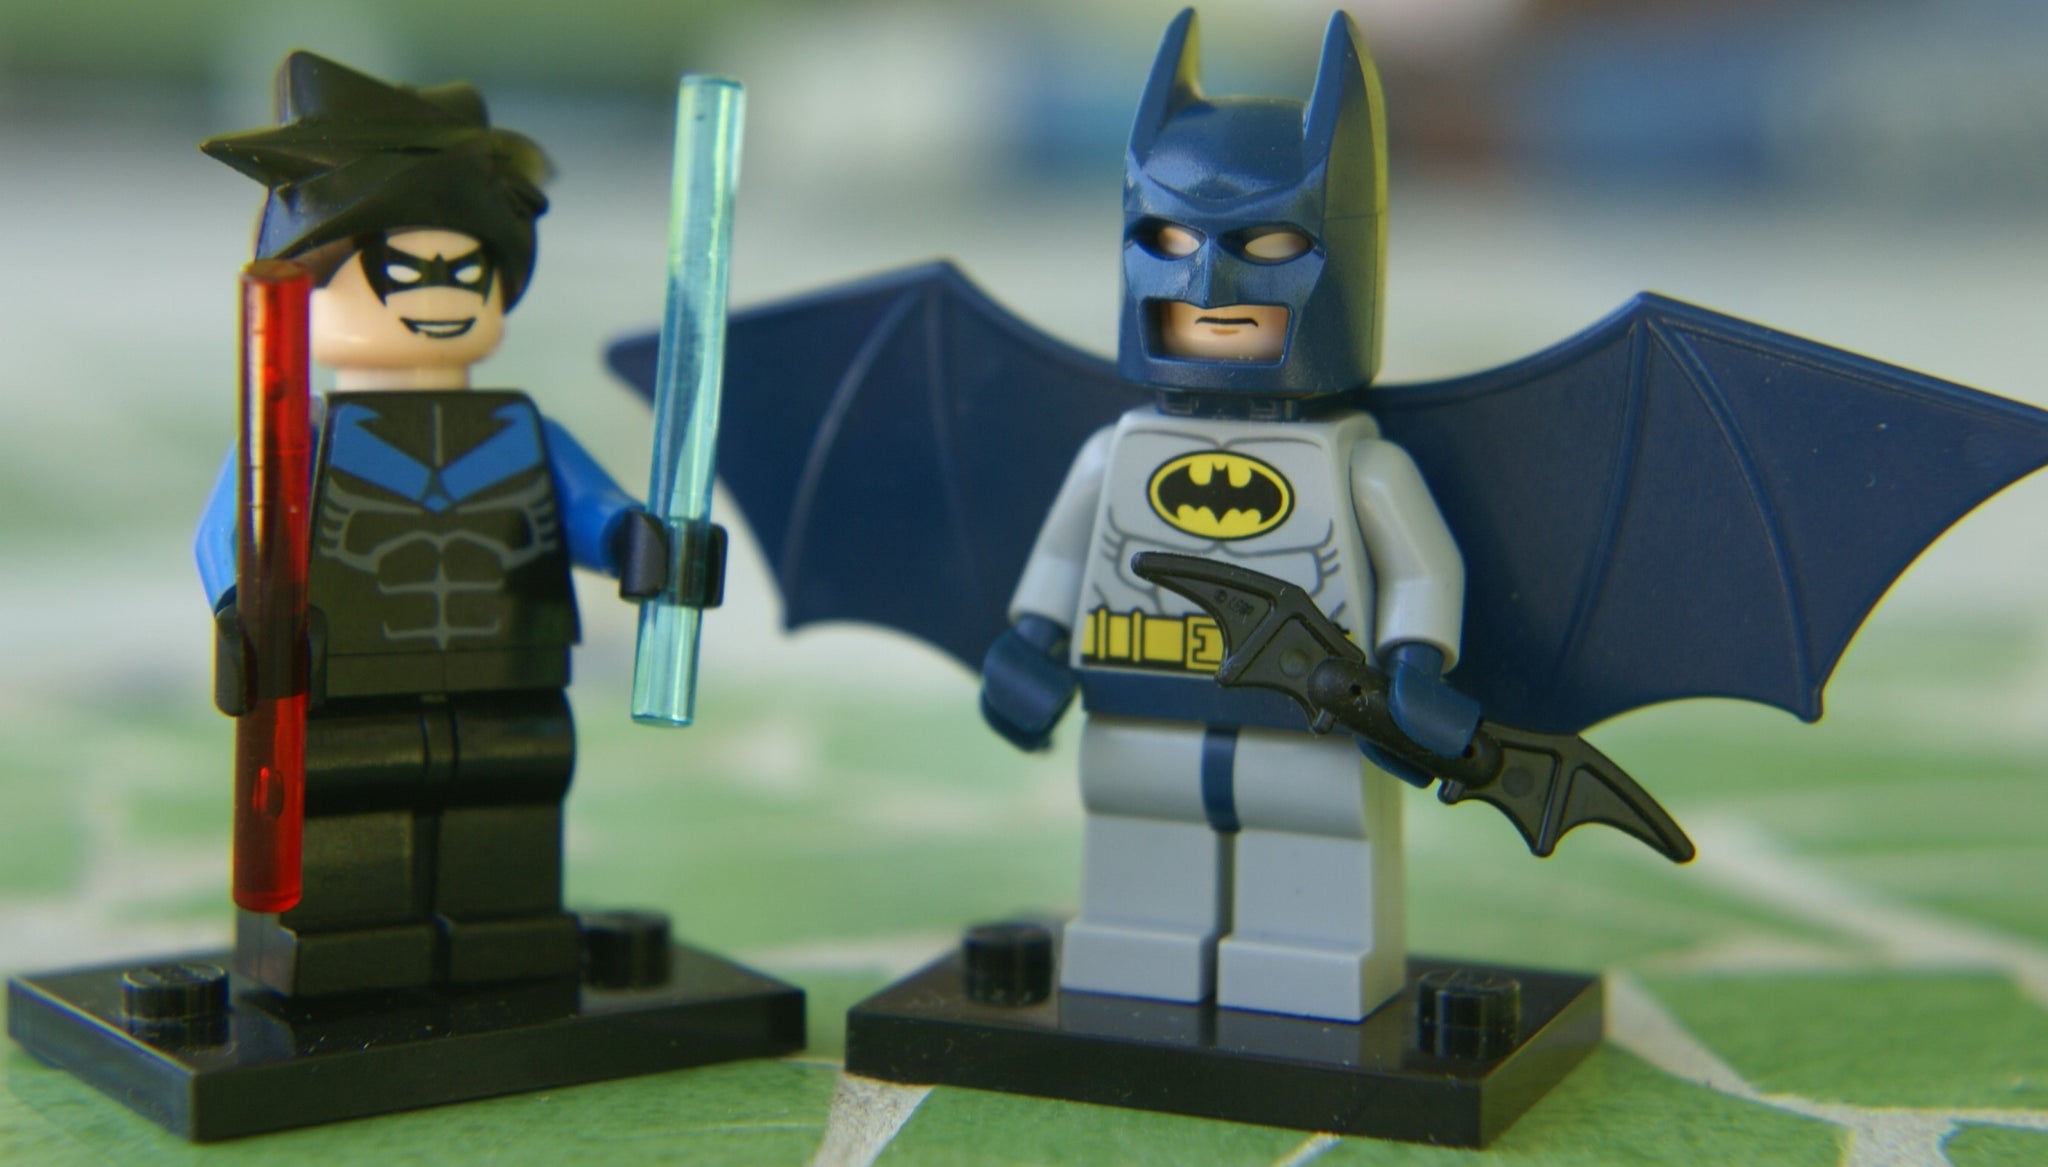 Batman (Minifigure), Brickipedia